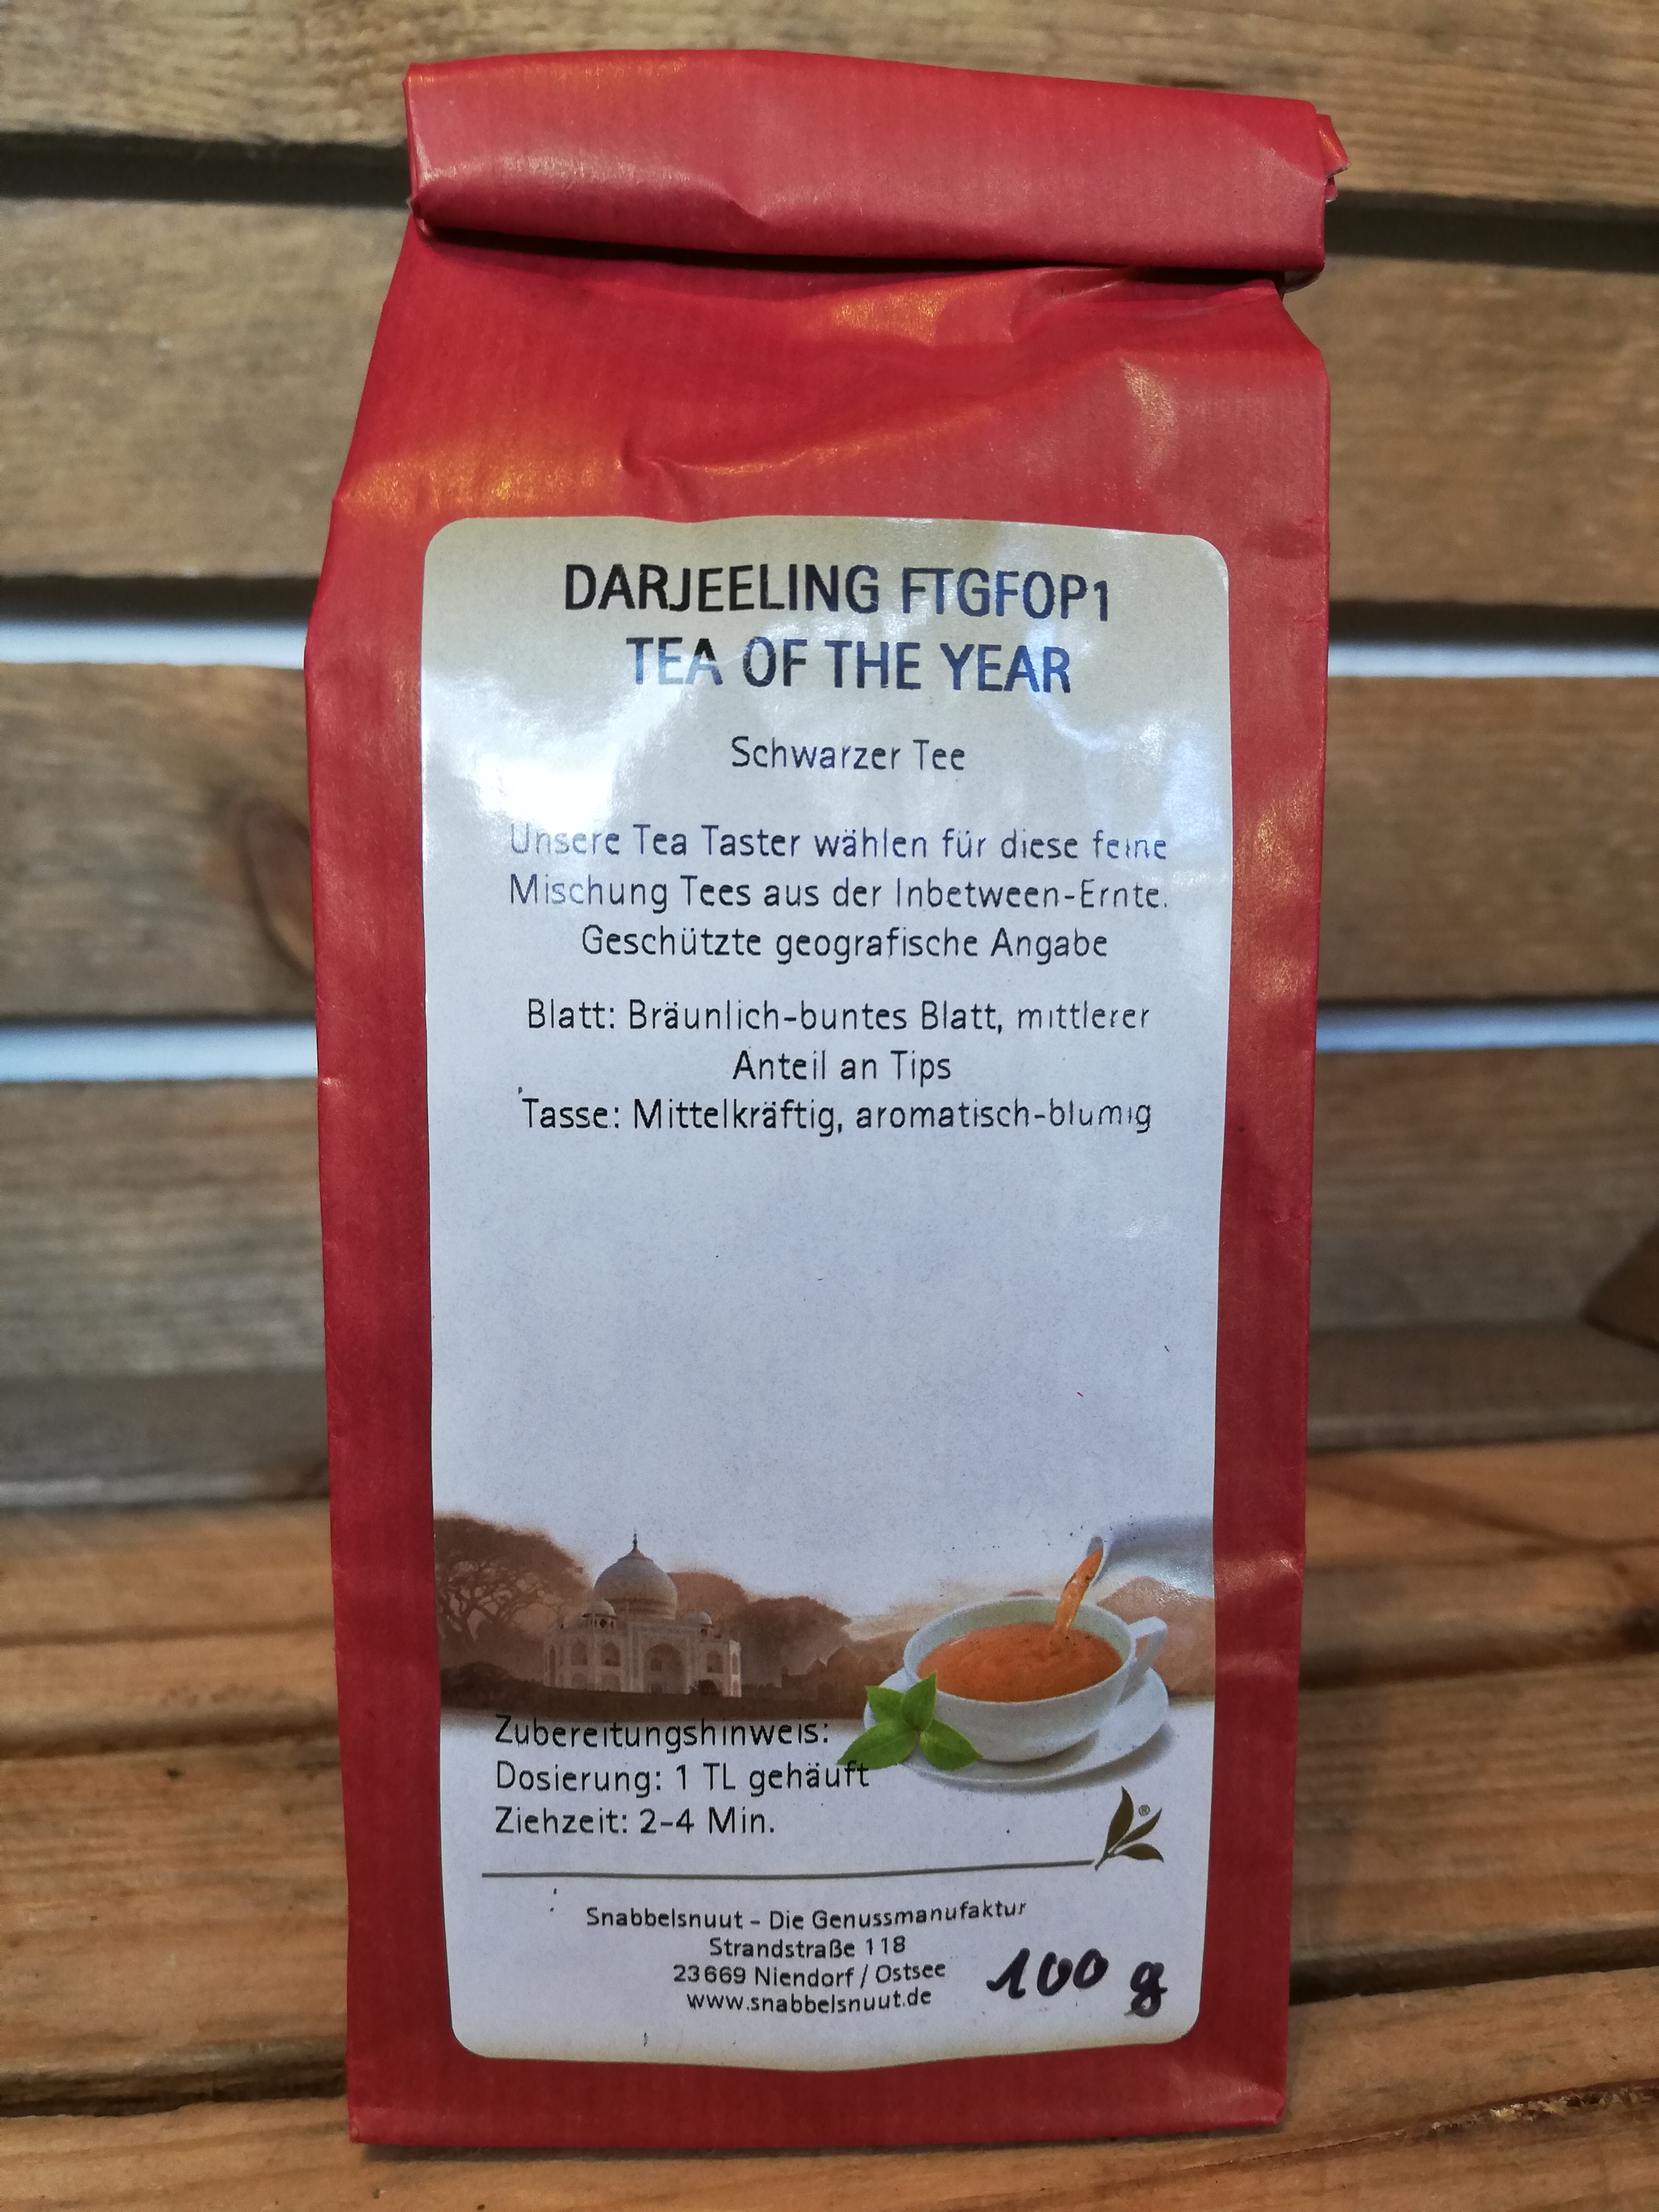 Darjeeling FTGFOP1 - Tea of the year